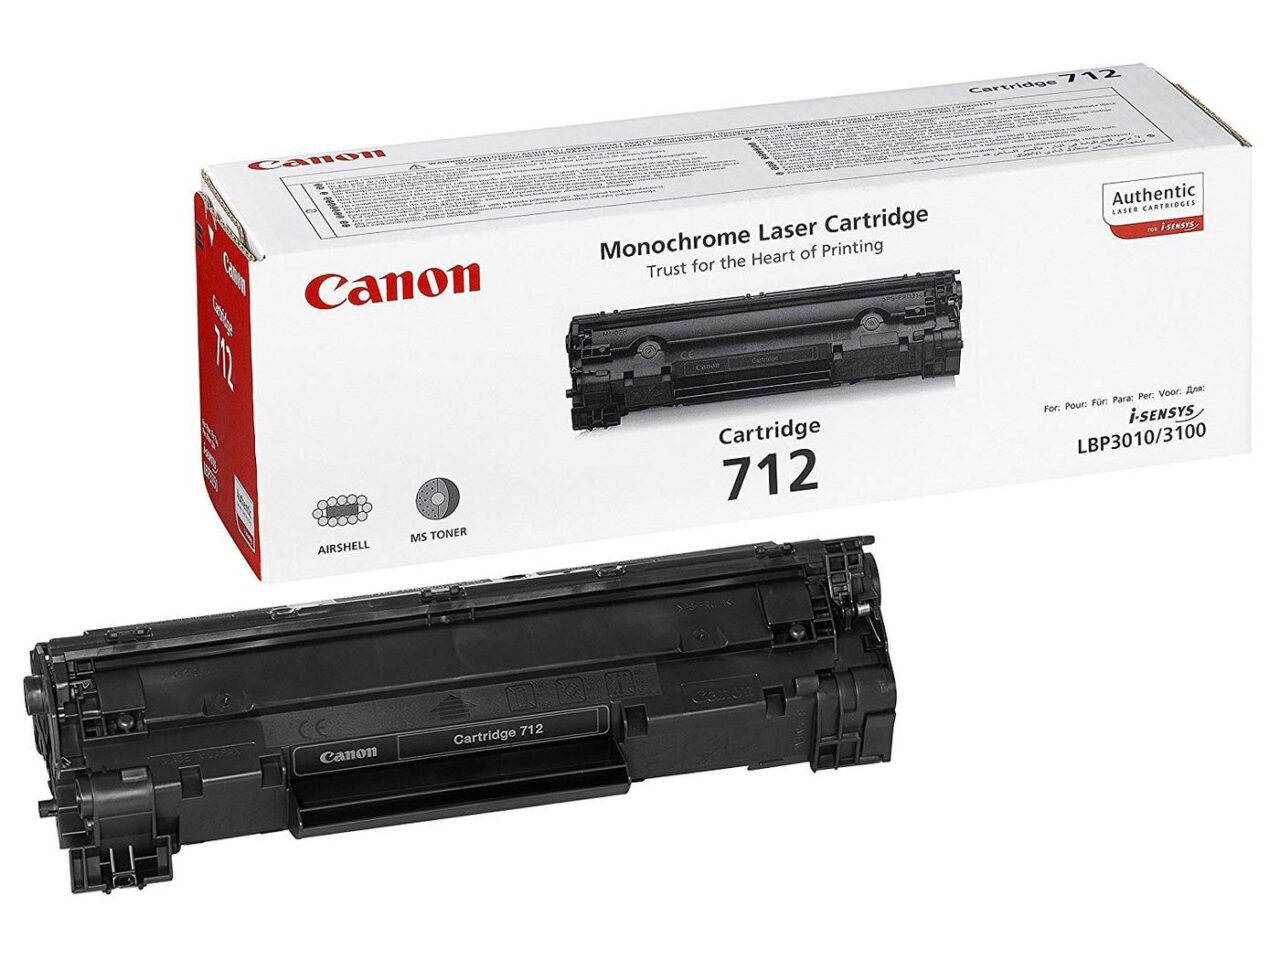 Canon 712 toner cartridge